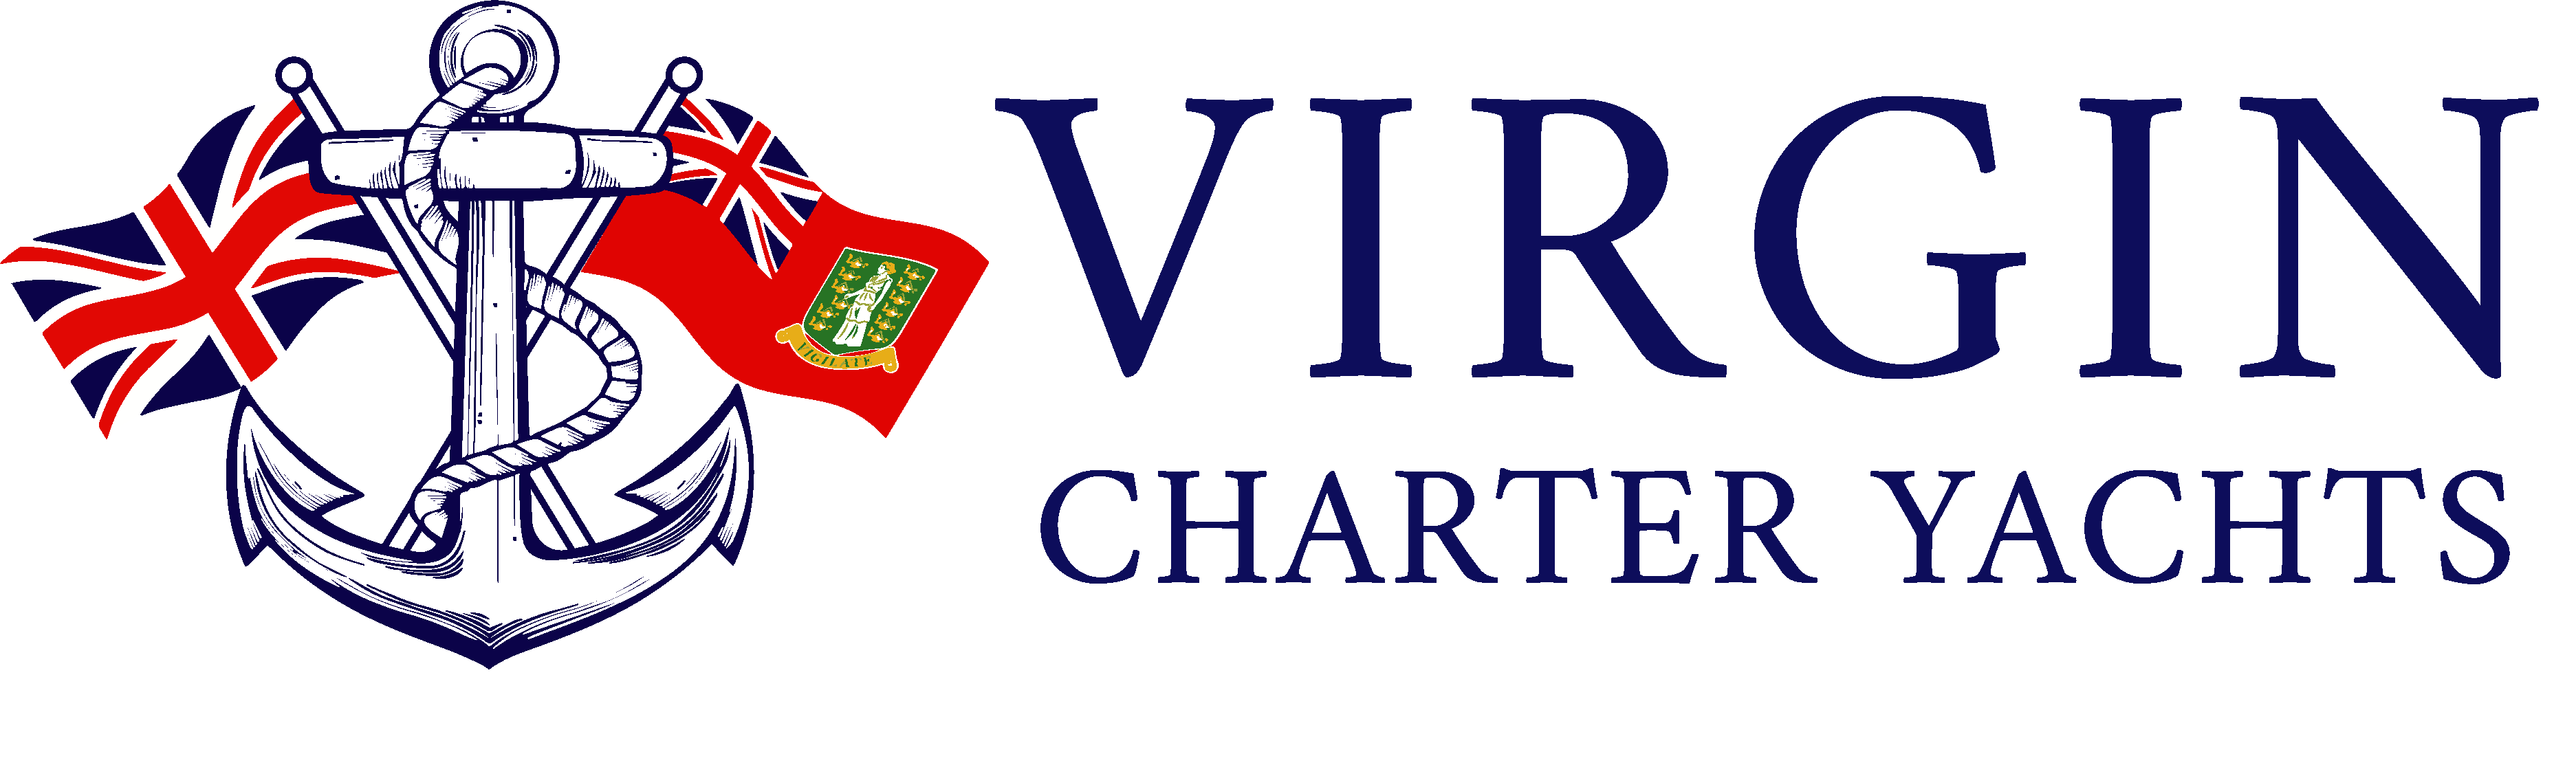 Angeleyes  Virgin Charter Yachts